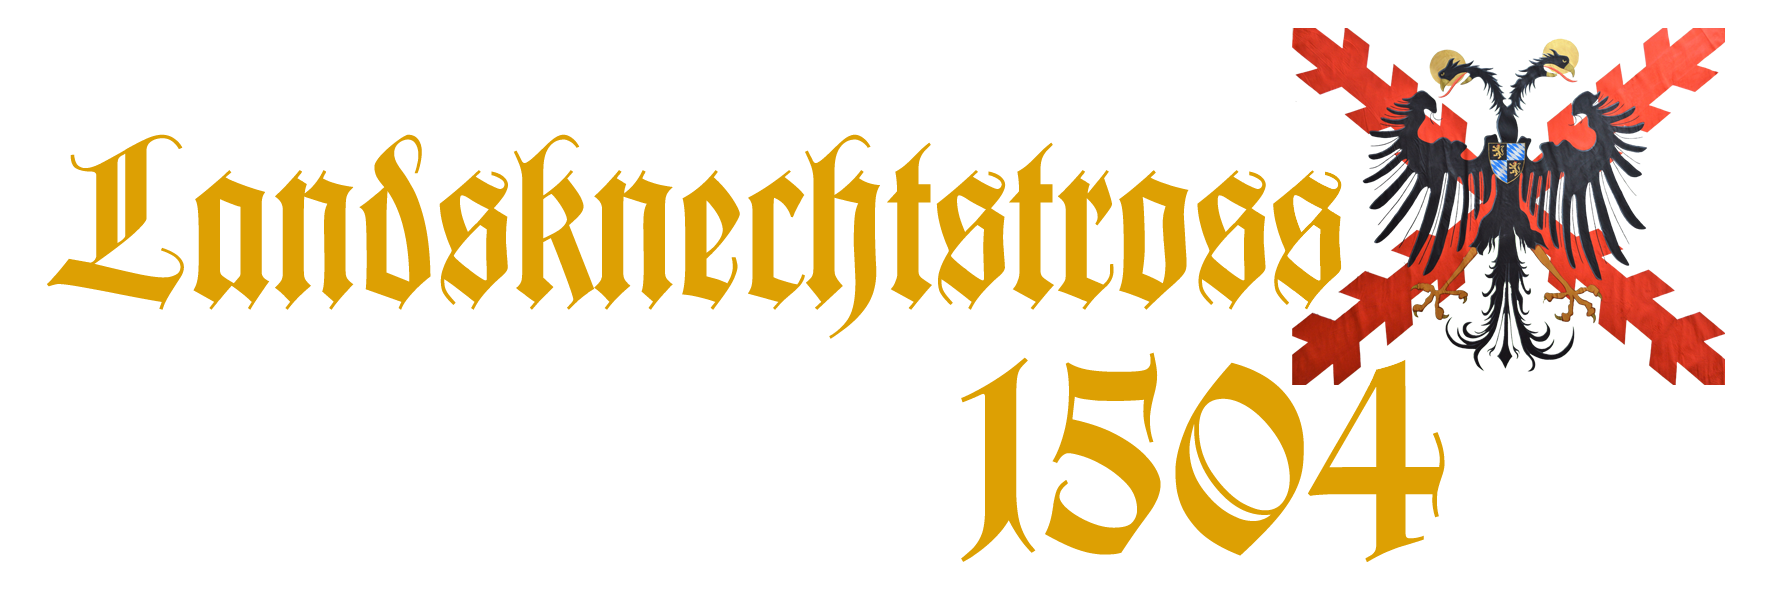 Landsknechtstross 1504